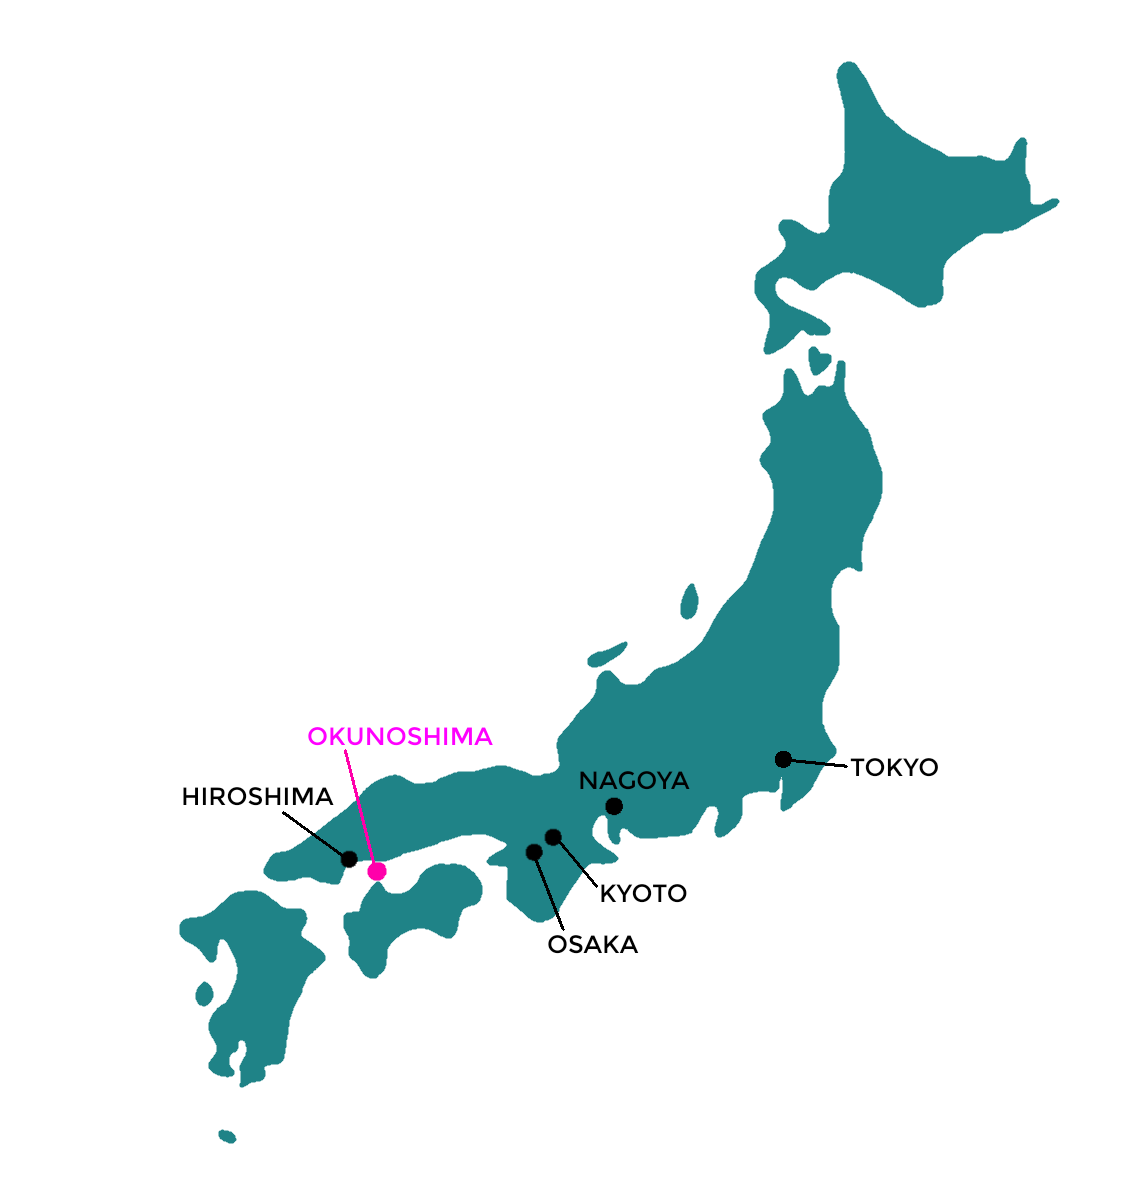 Simple map of Japan with major cities marked (Tokyo, Nagoya, Kyoto, Osaka, Hiroshima) in relations to Okunoshima (Rabbit Island)